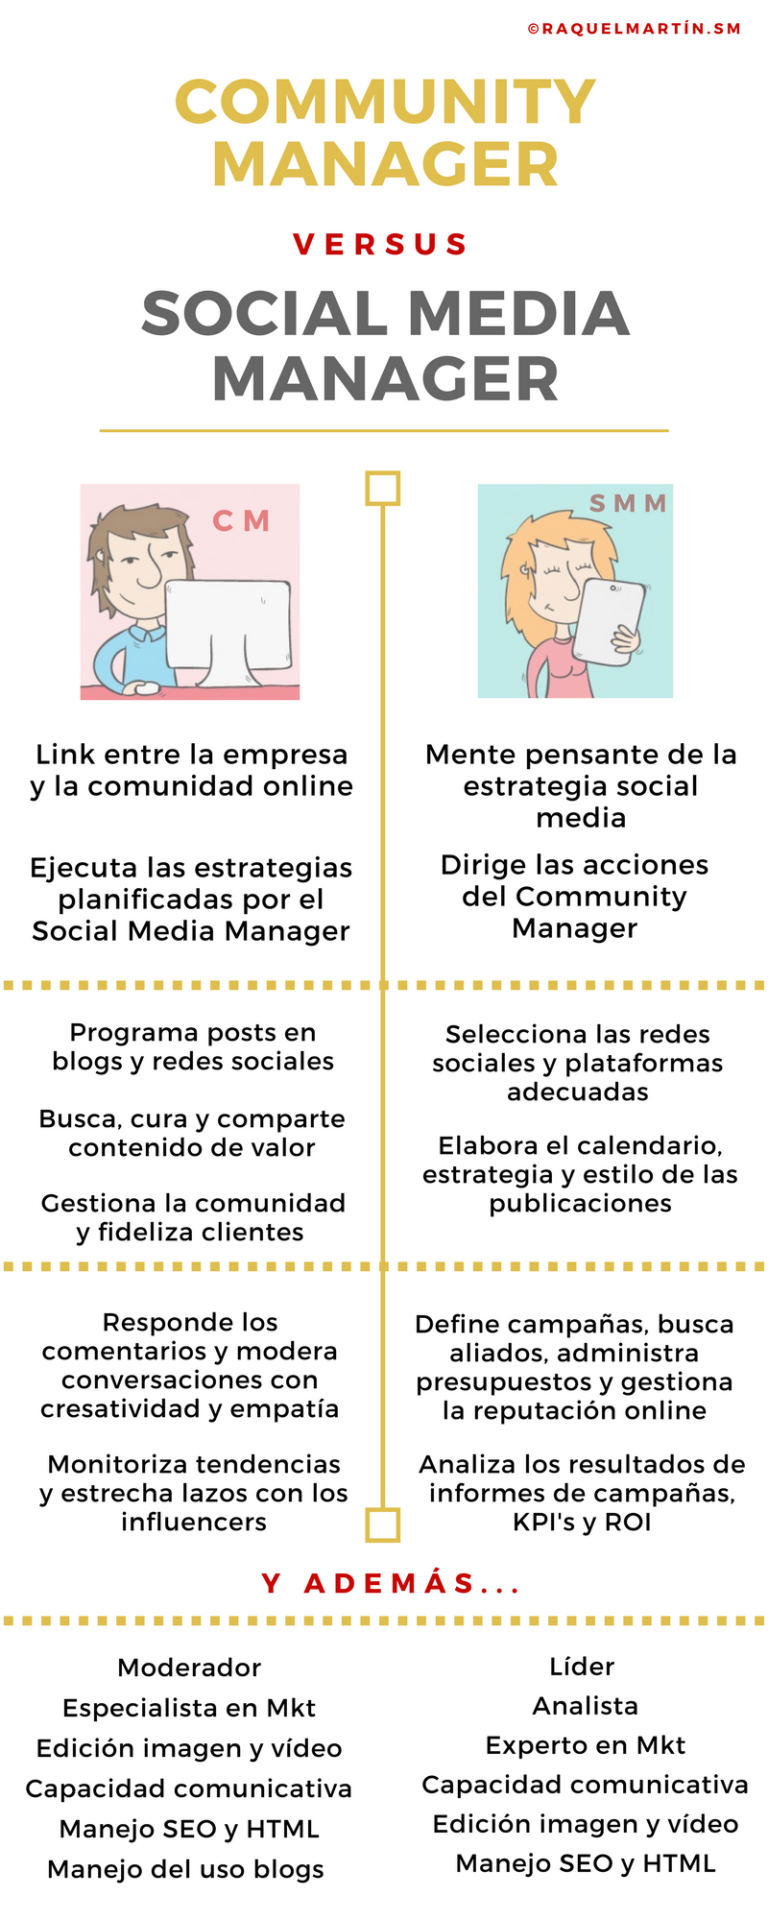 Infografia - Community Manager vs Social Media Manager: Habilidades, Responsabilidades y Funciones [Infografía] - Raquel Martin